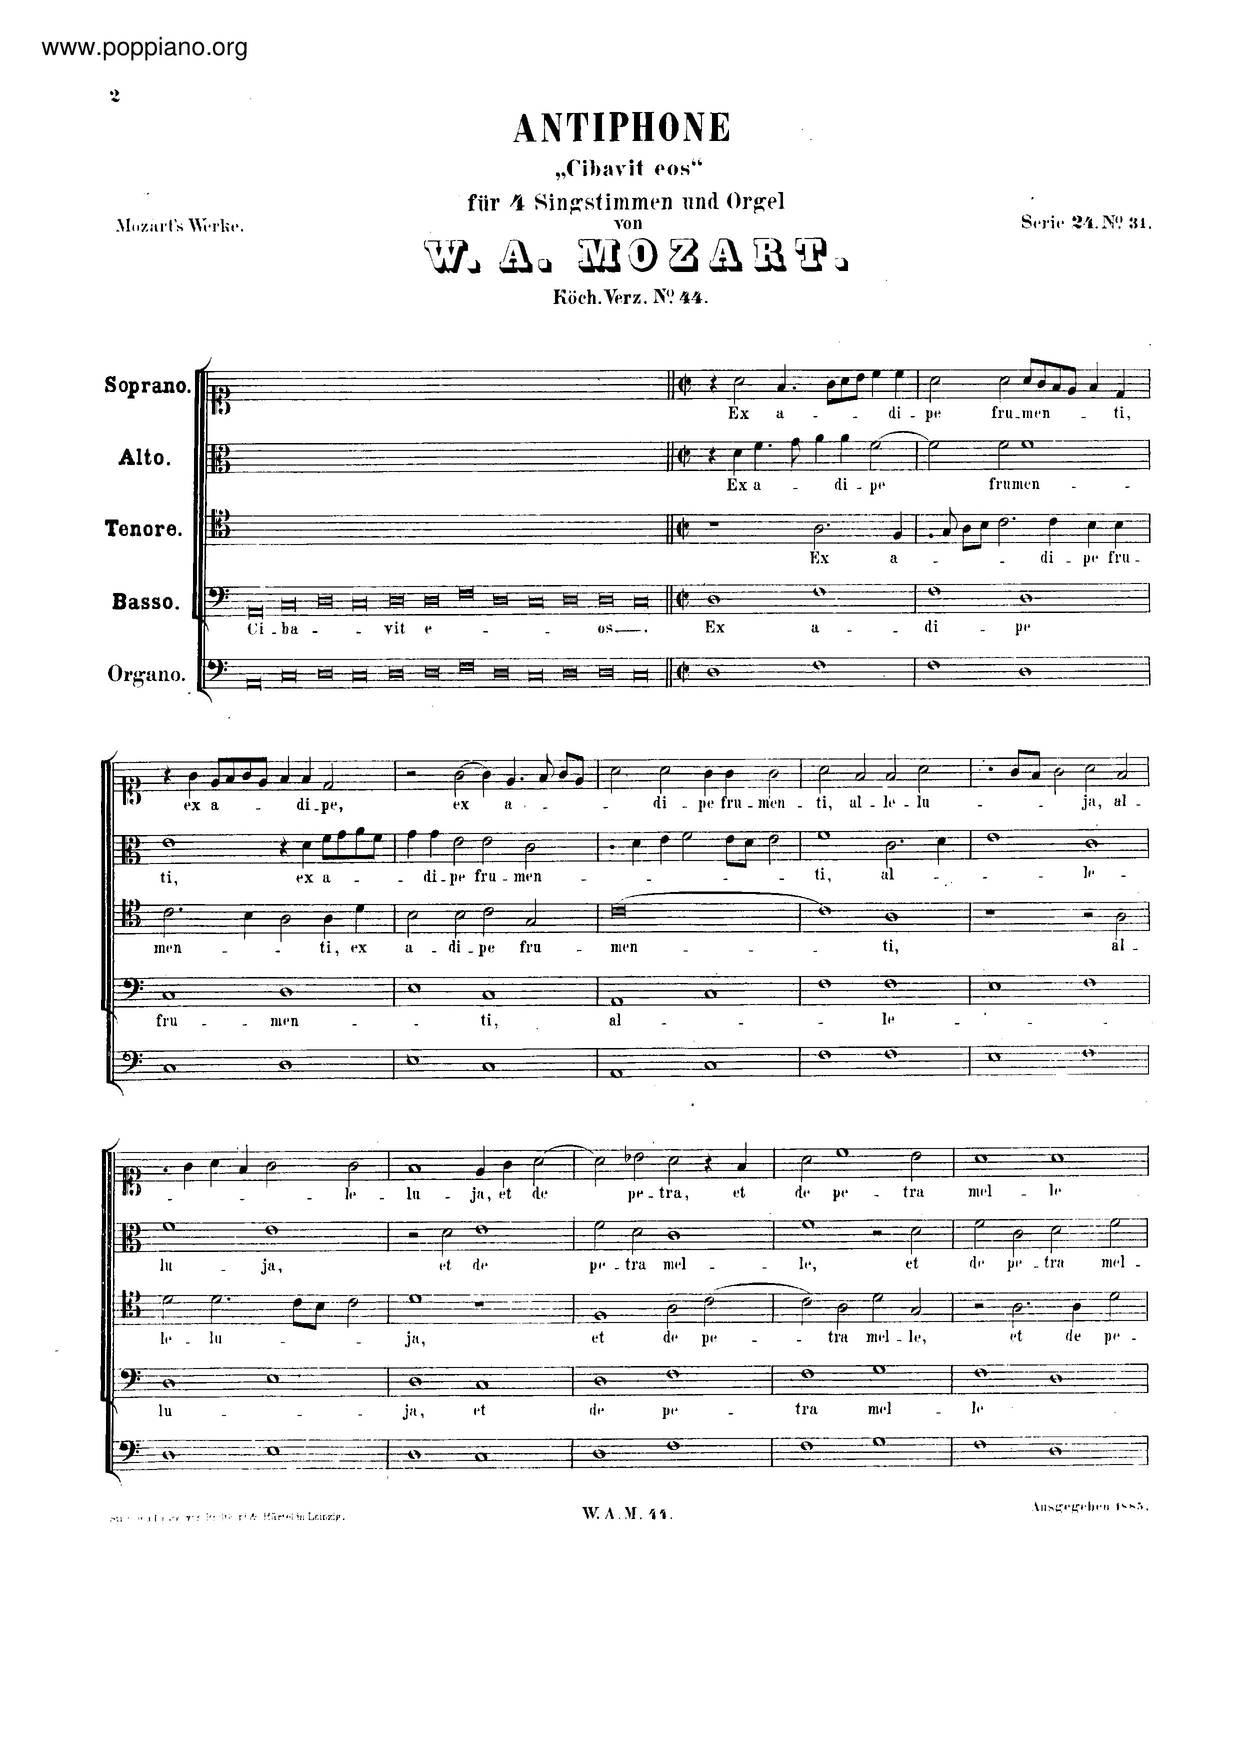 Cibavit Eos, K. 44/73Uピアノ譜